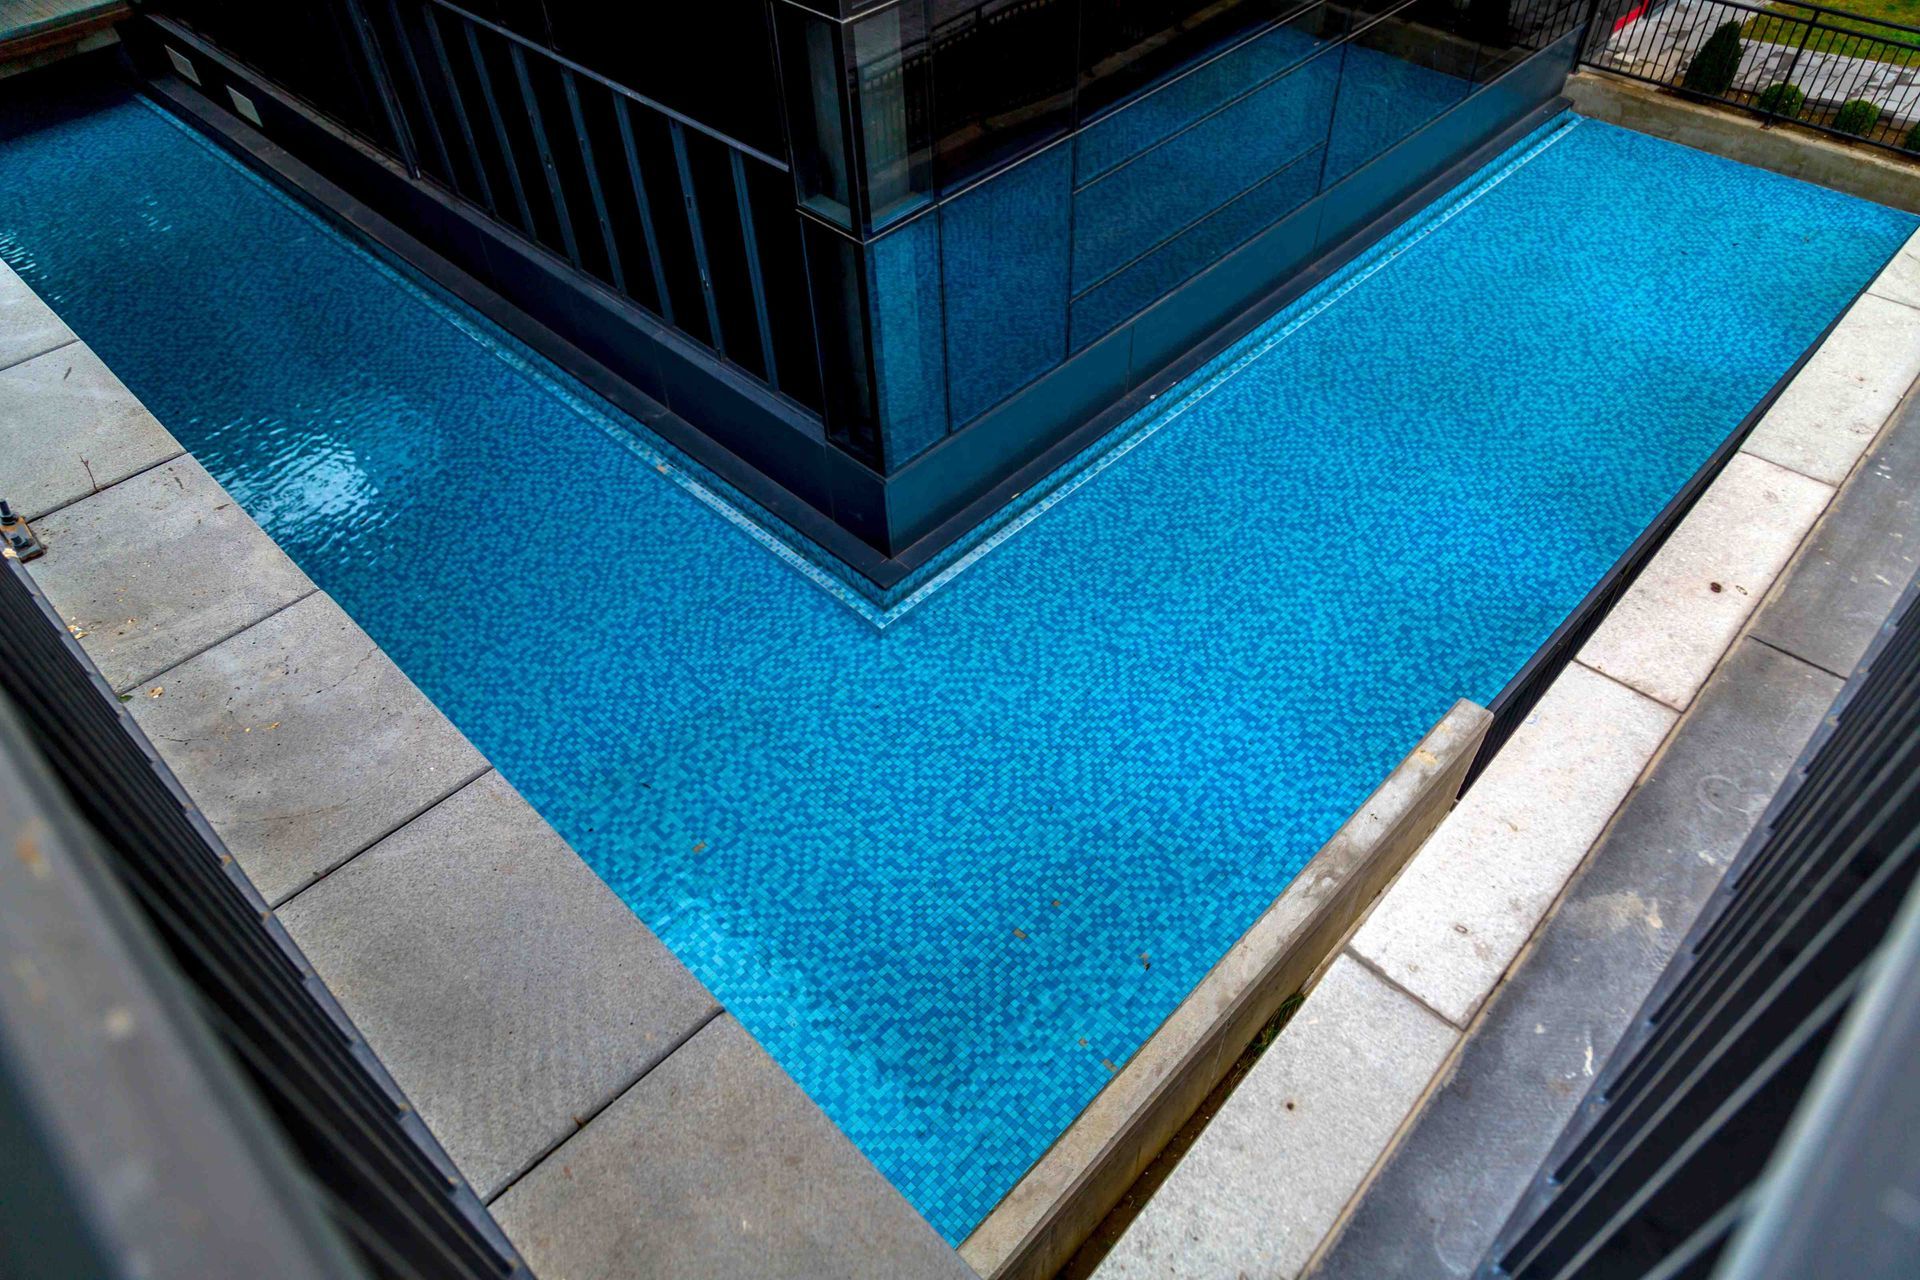 An L-shaped pool